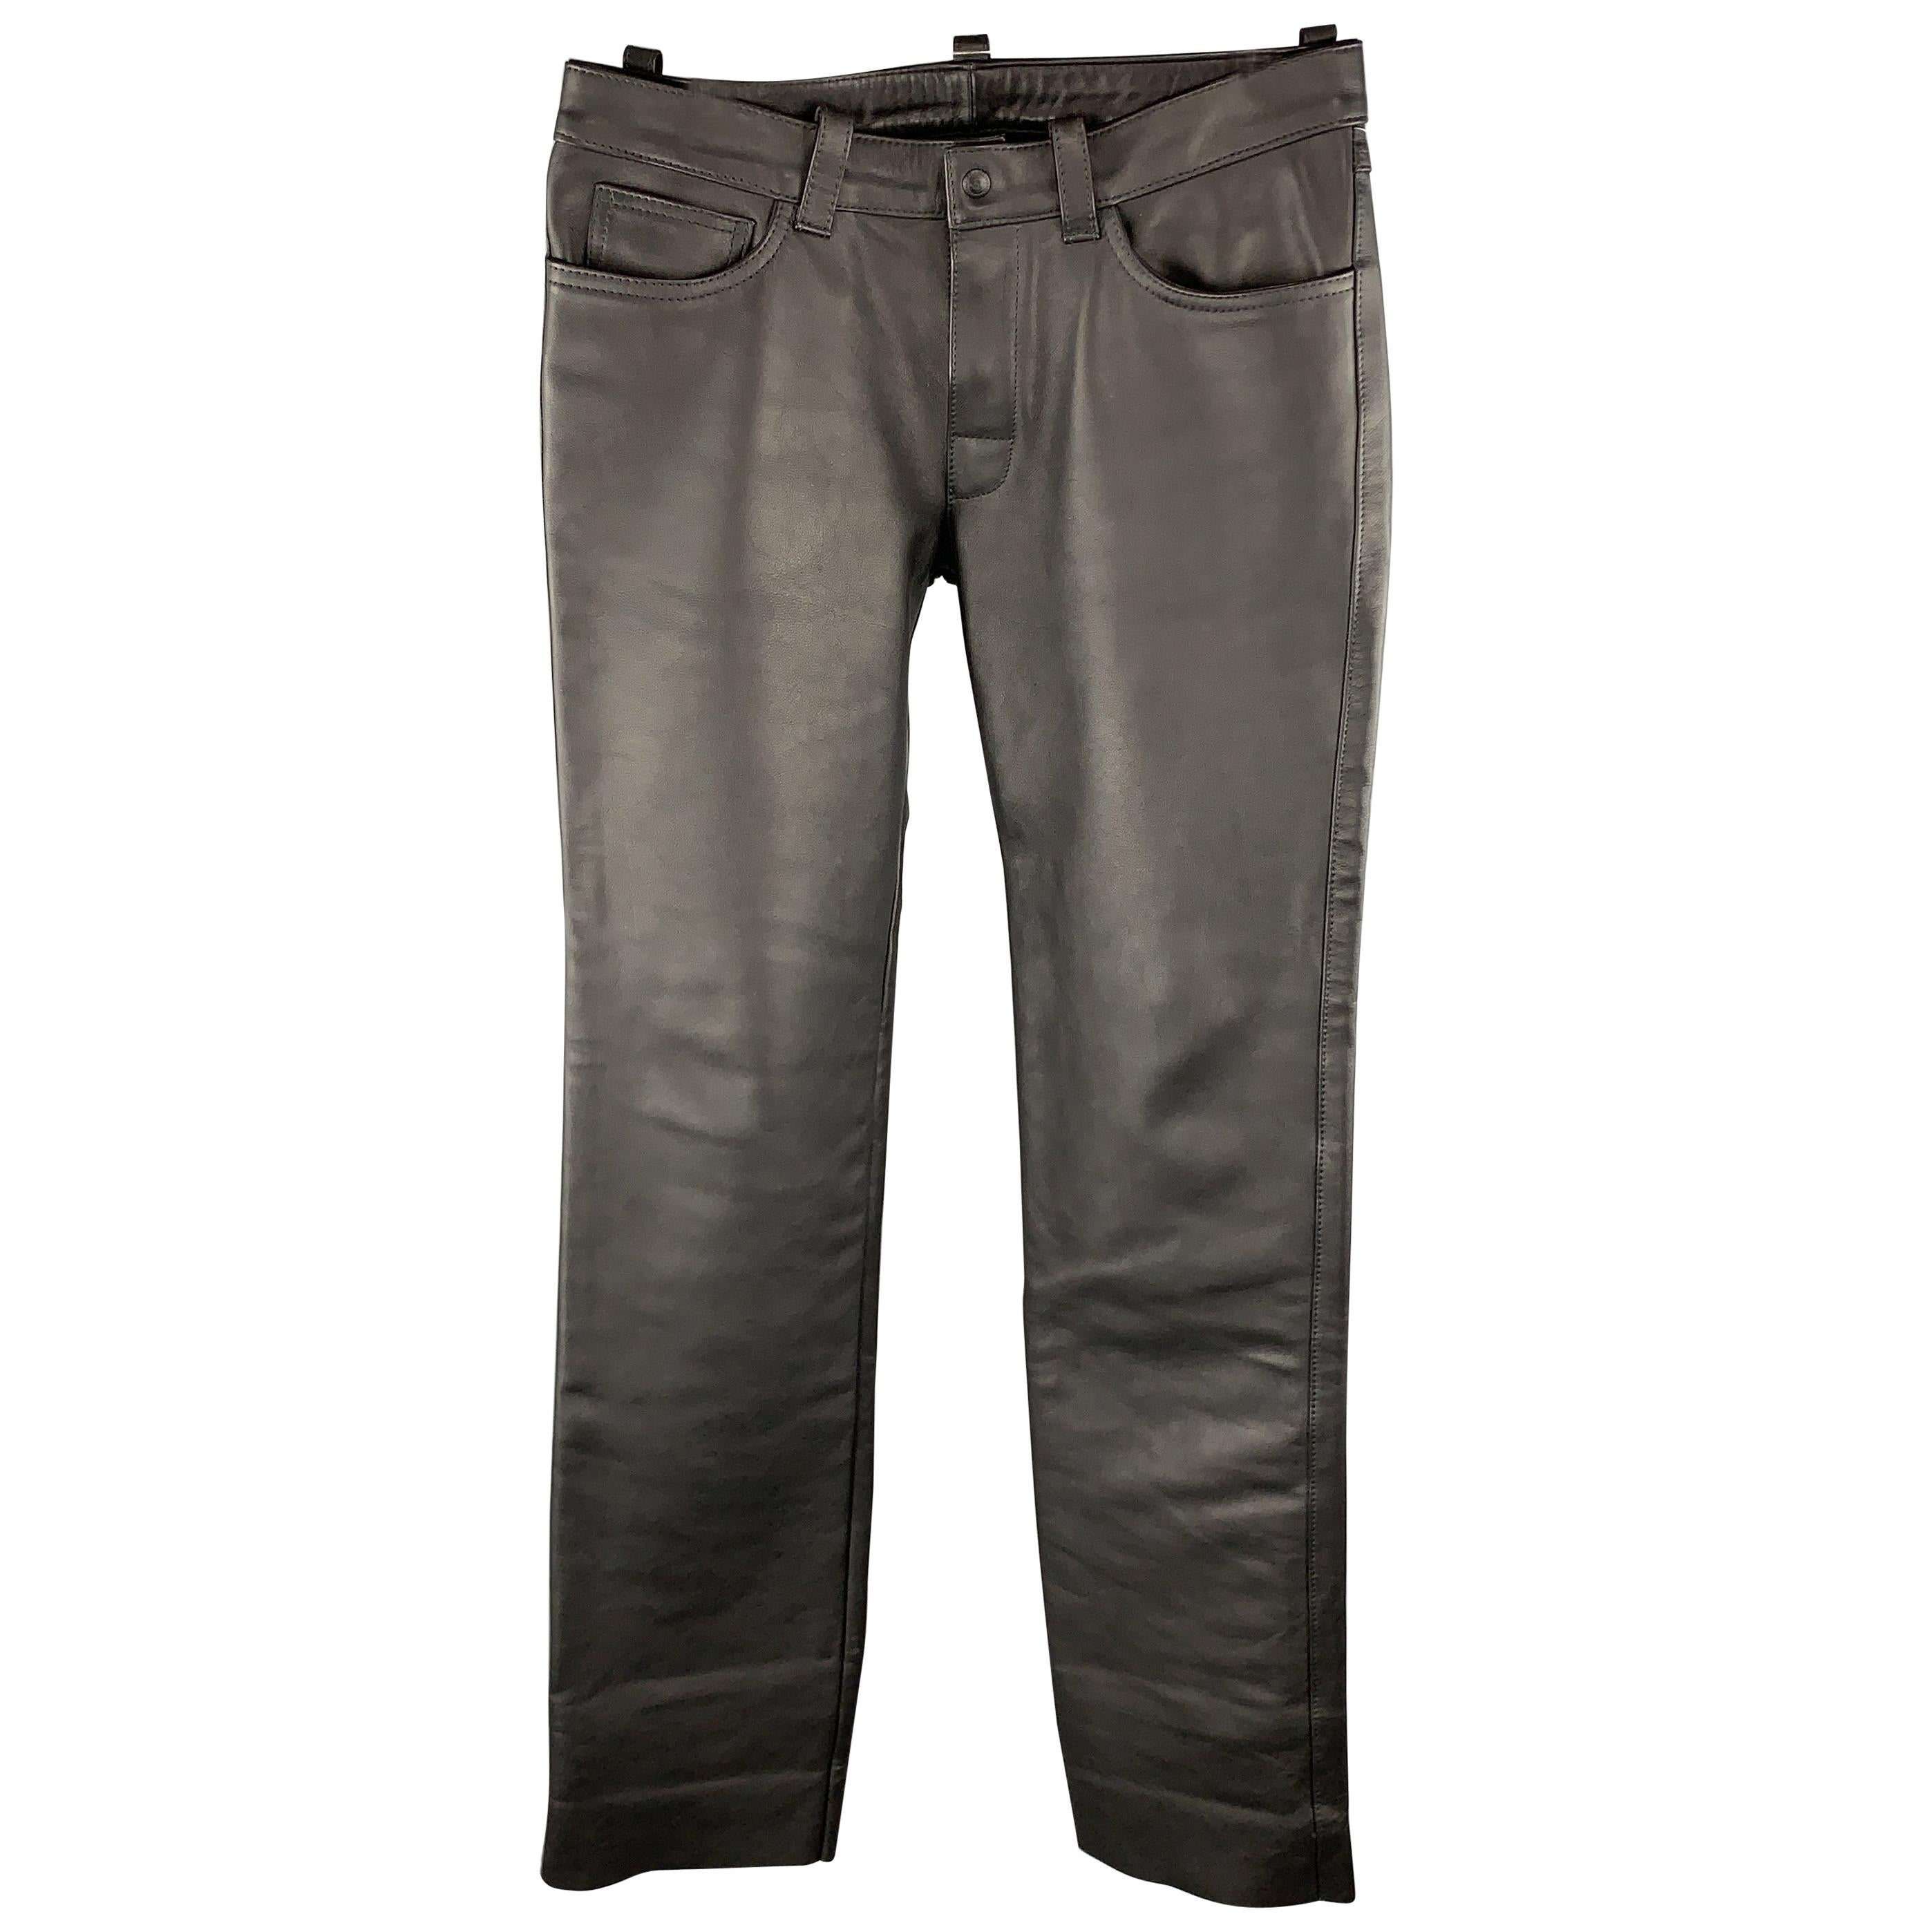 MR. S LEATHER Size 35 x 36 Black Leather Jean Cut Pants